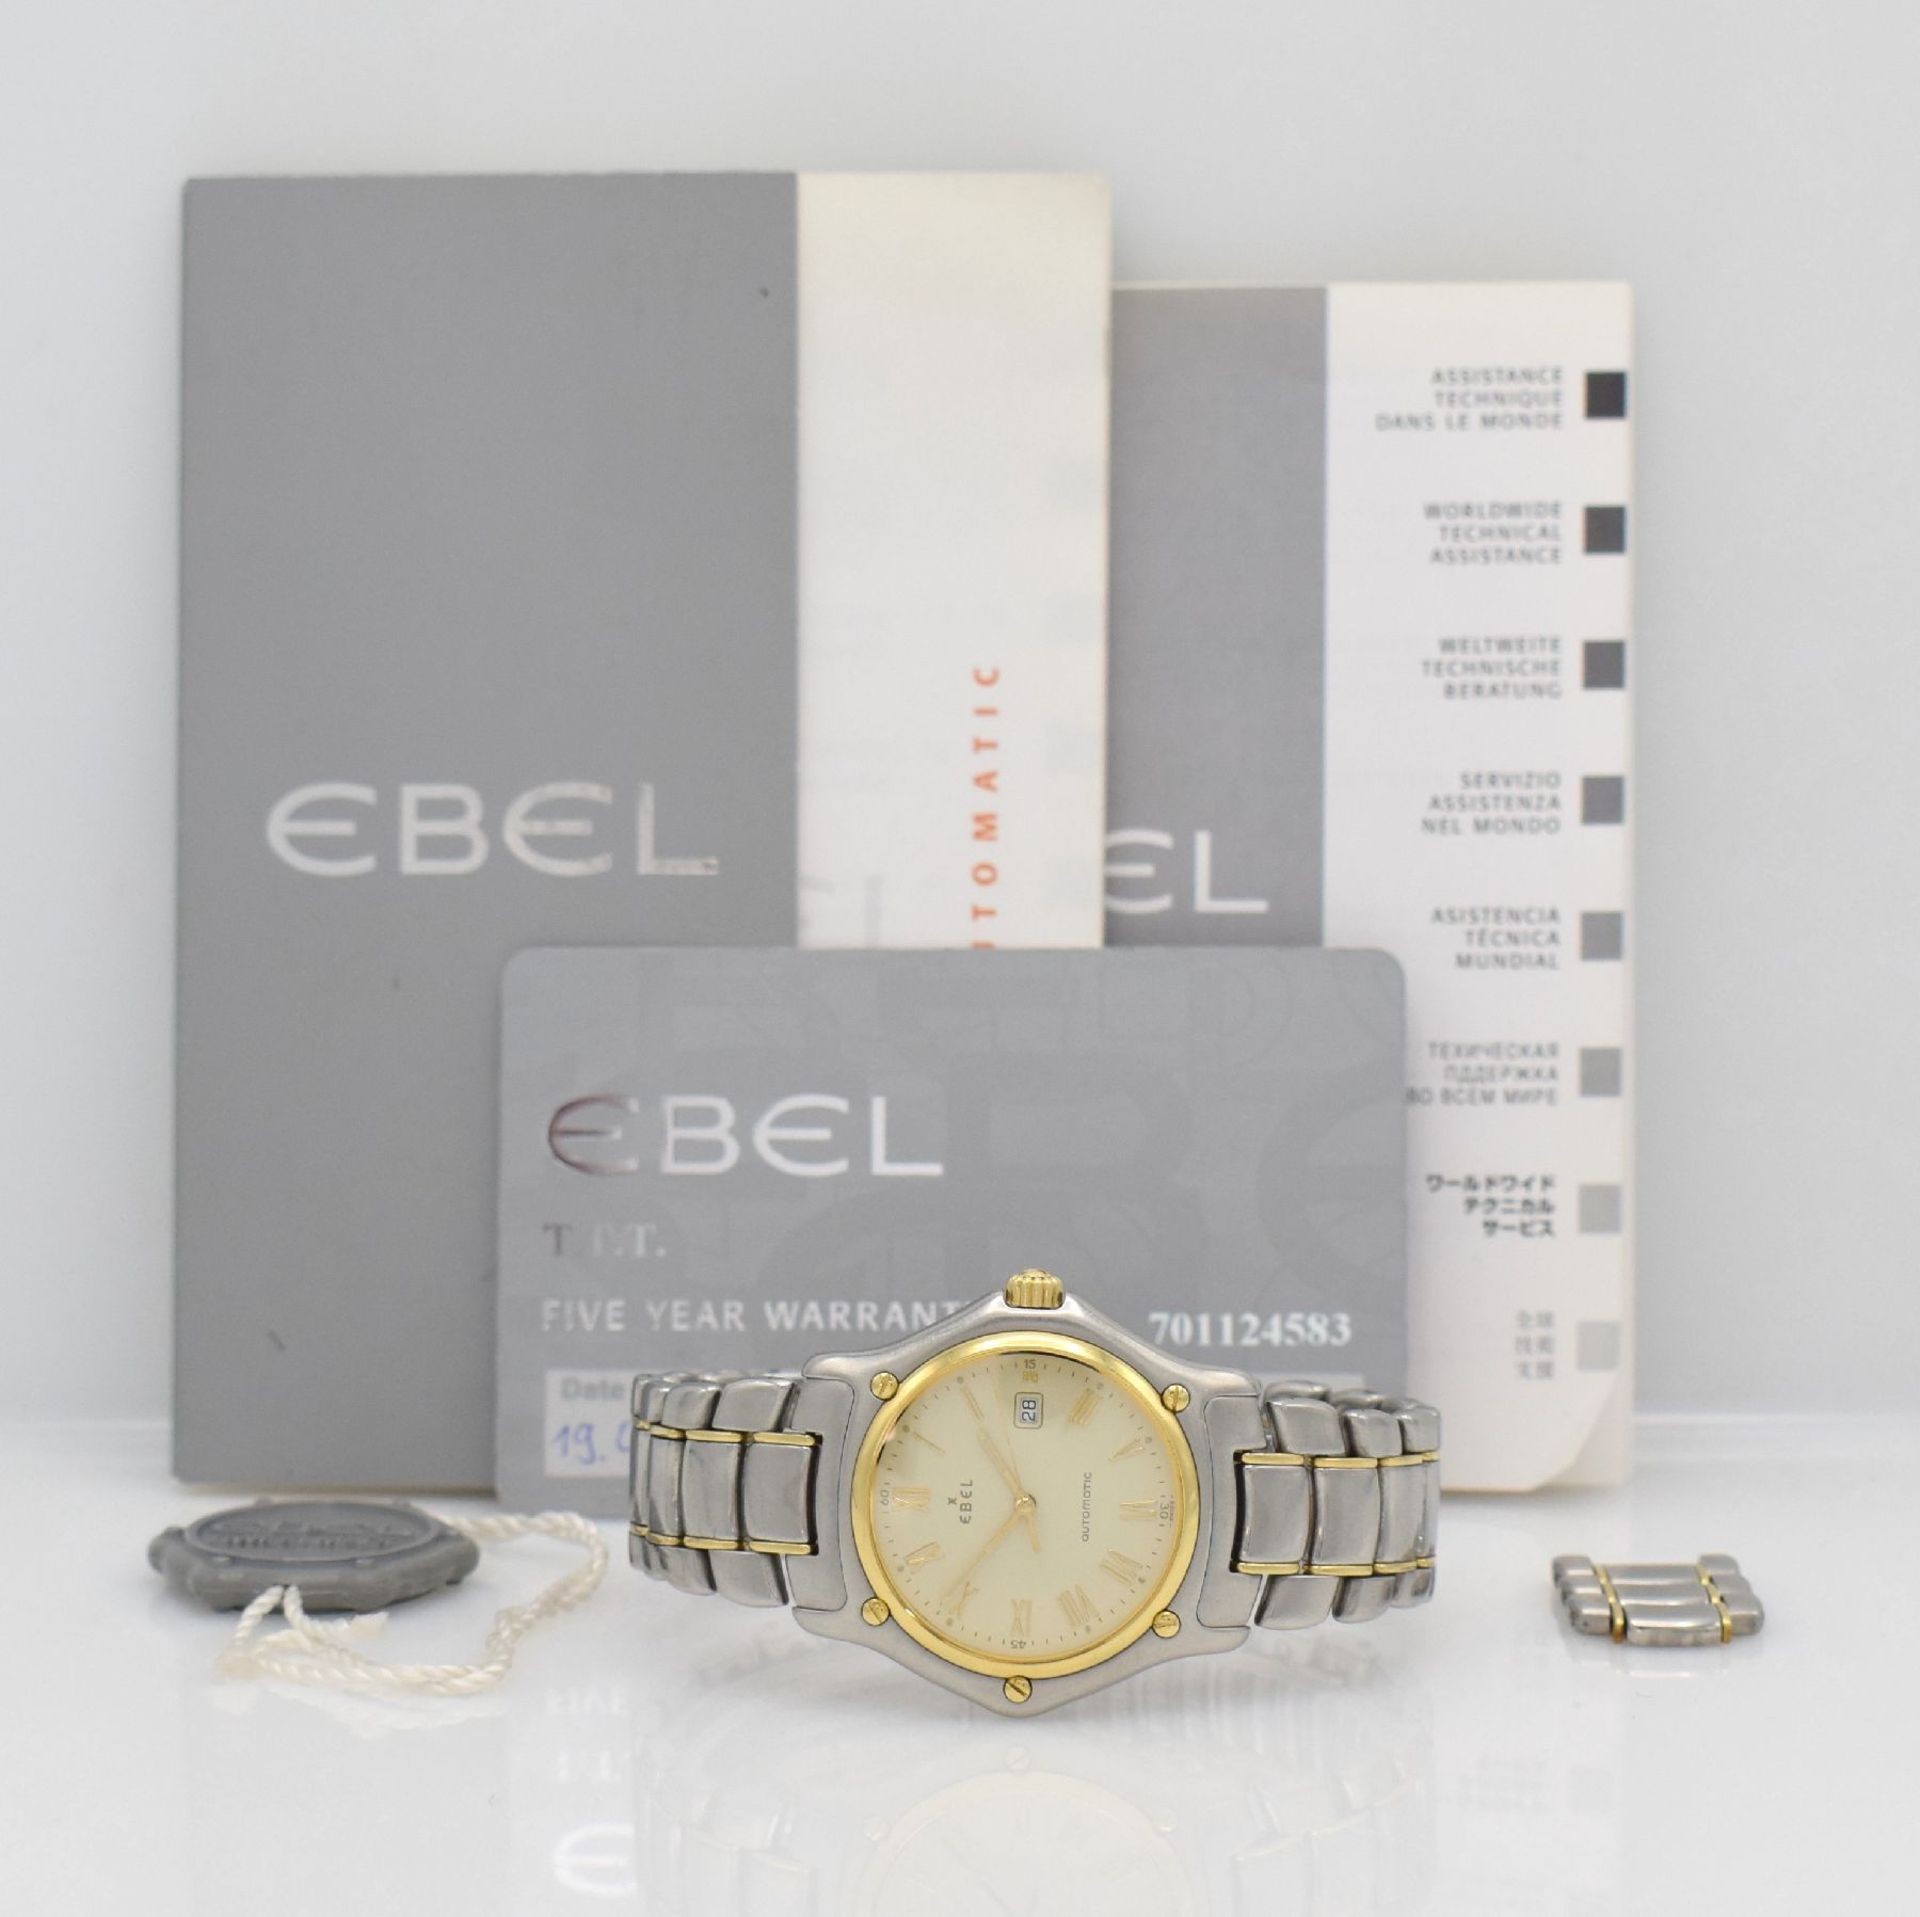 EBEL 1911 wristwatch in stainless steel/gold, Switzerland sold according to warranty card inMay - Bild 8 aus 10